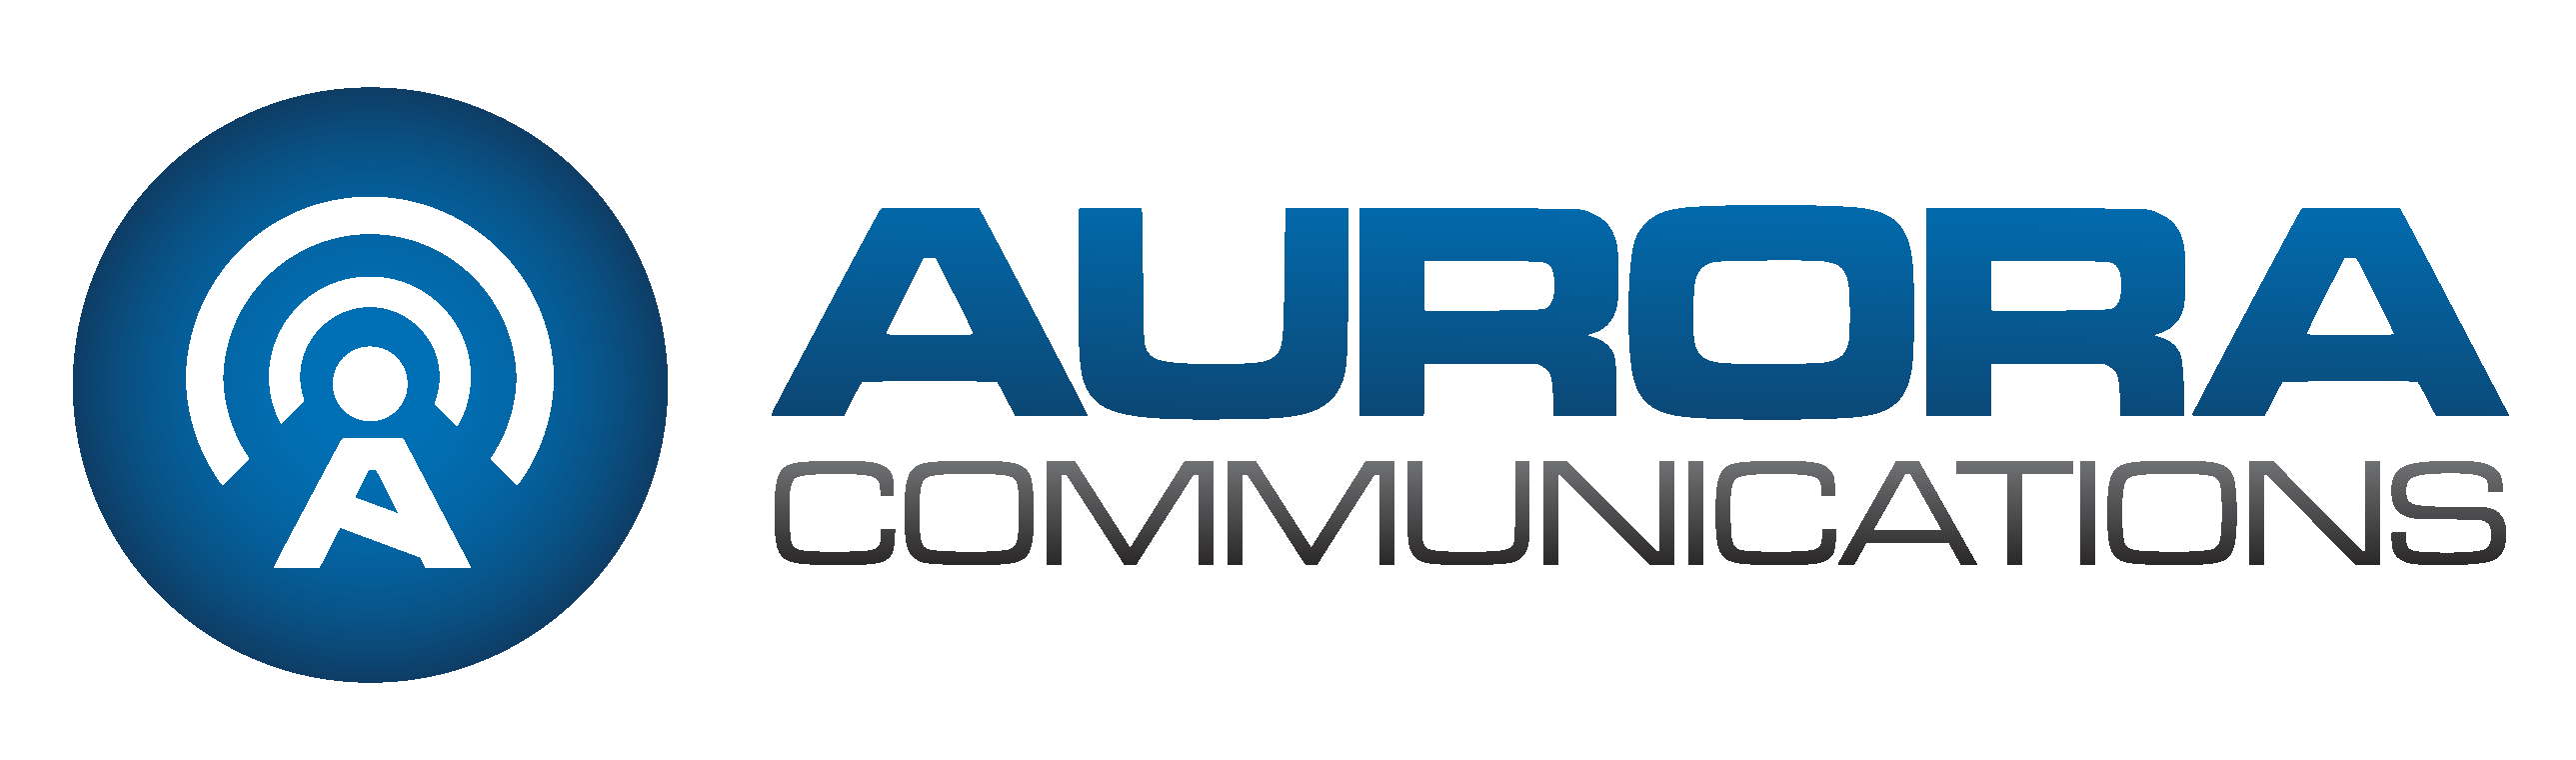 Aurora Communications Technology, Inc.